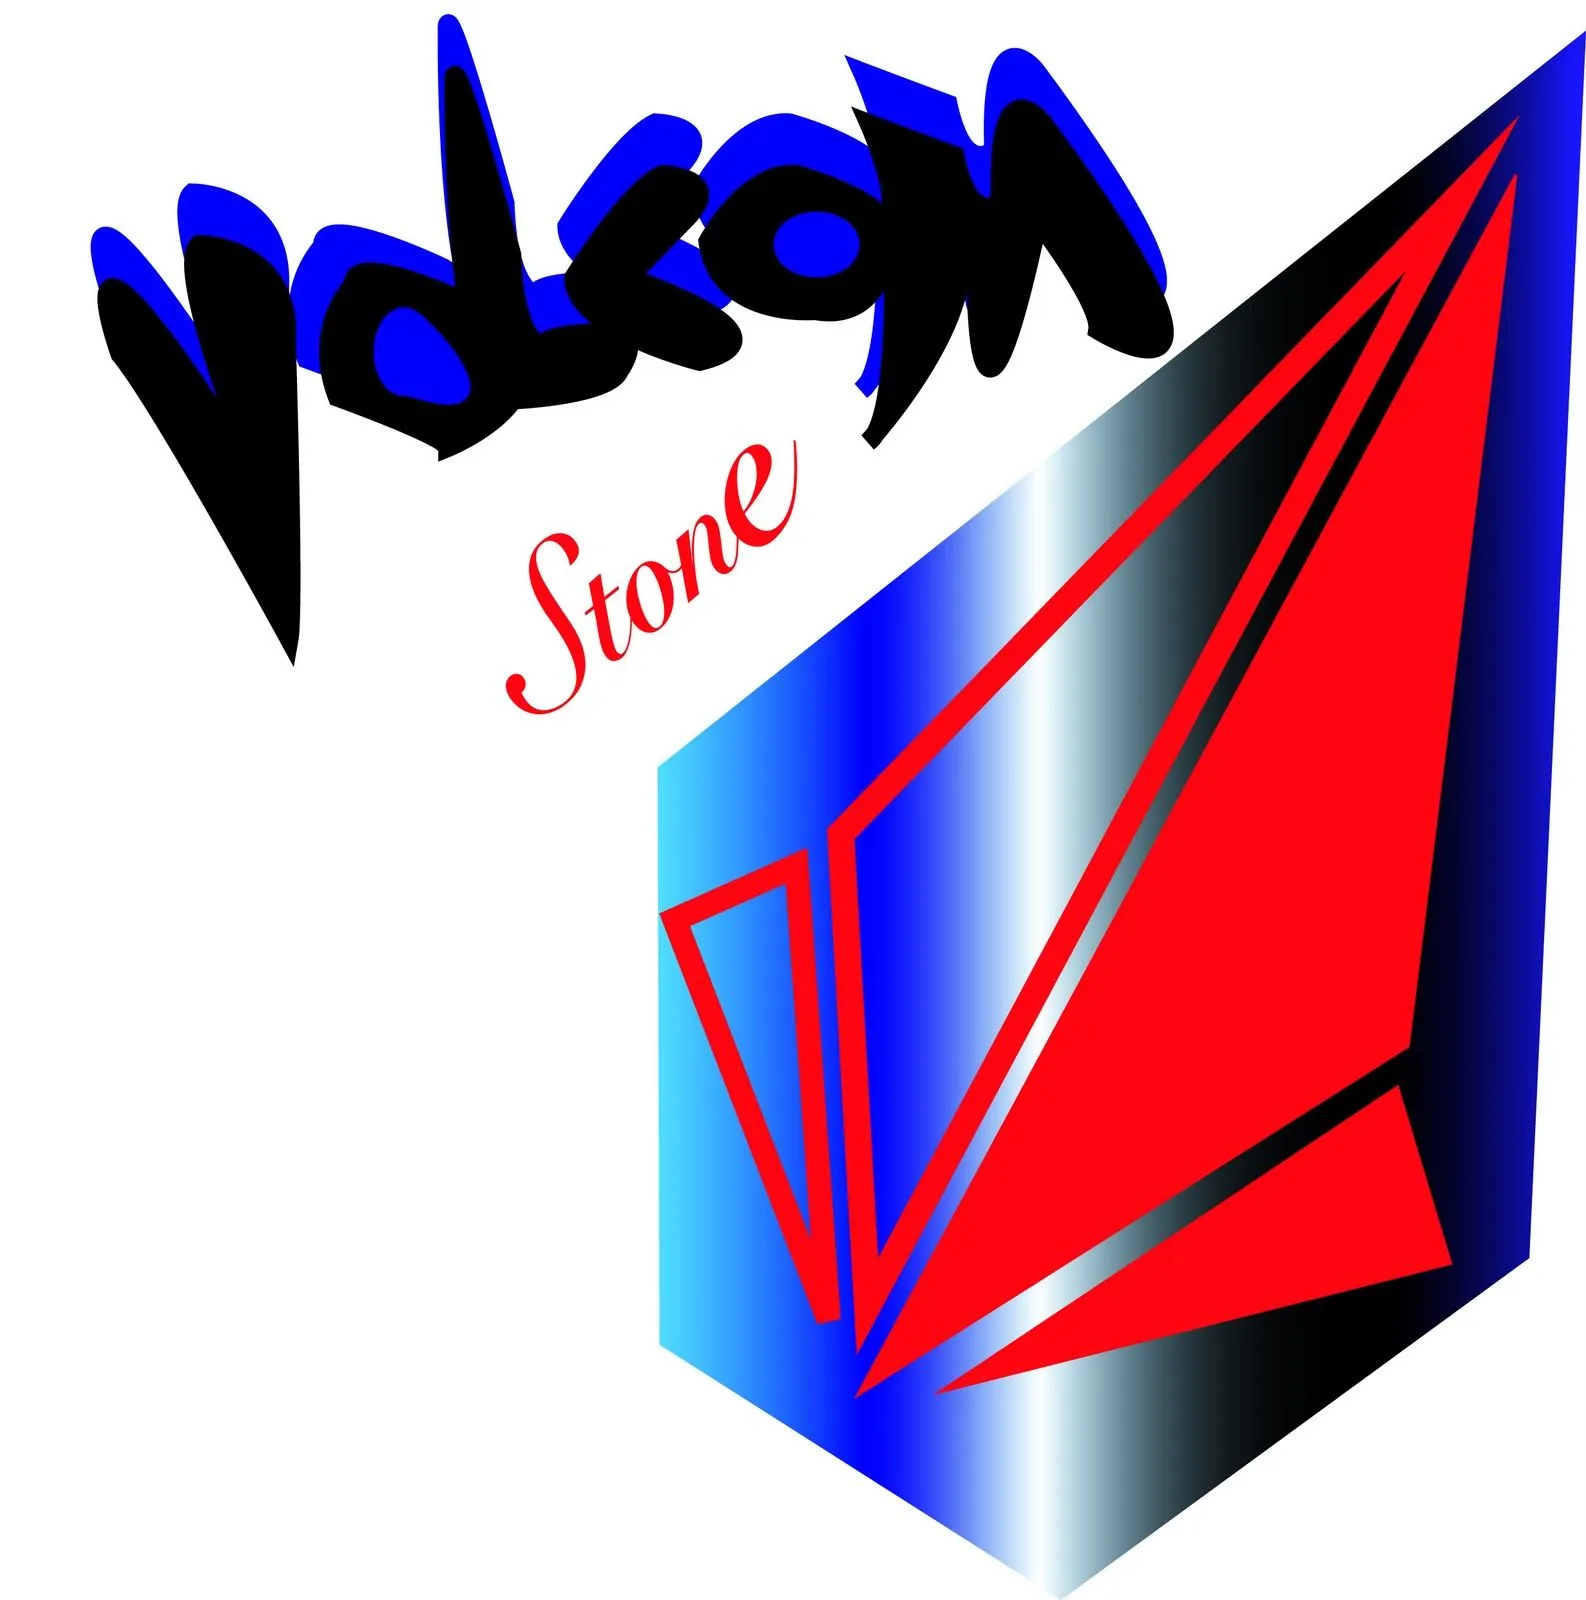 volcom stone logo